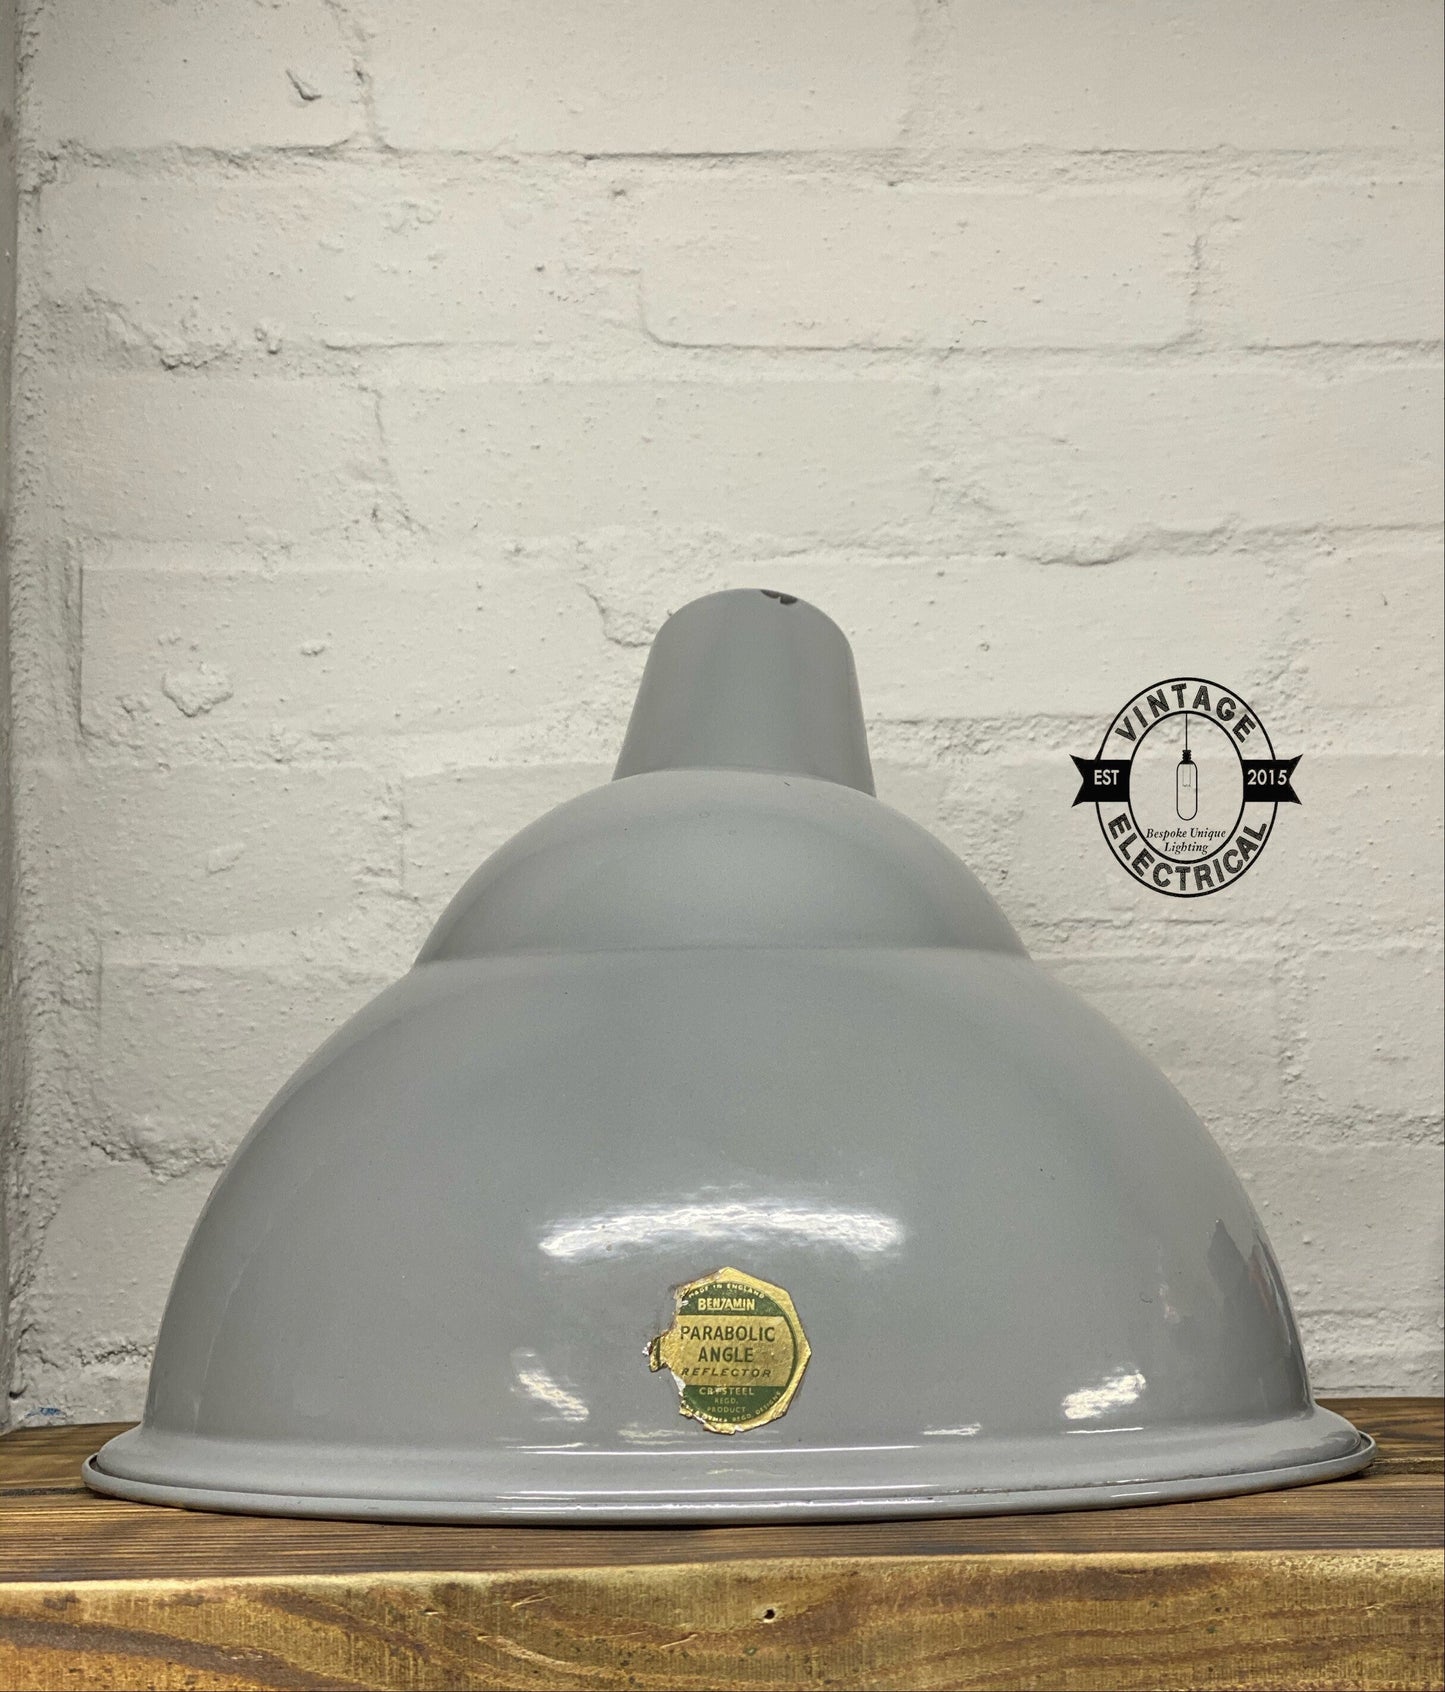 Benjamin XL 1950s Industrial Parabolic Shade Pendant Set Light | Ceiling Dining Room Kitchen Table | Vintage 1 x Edison Filament Bulb Lamp